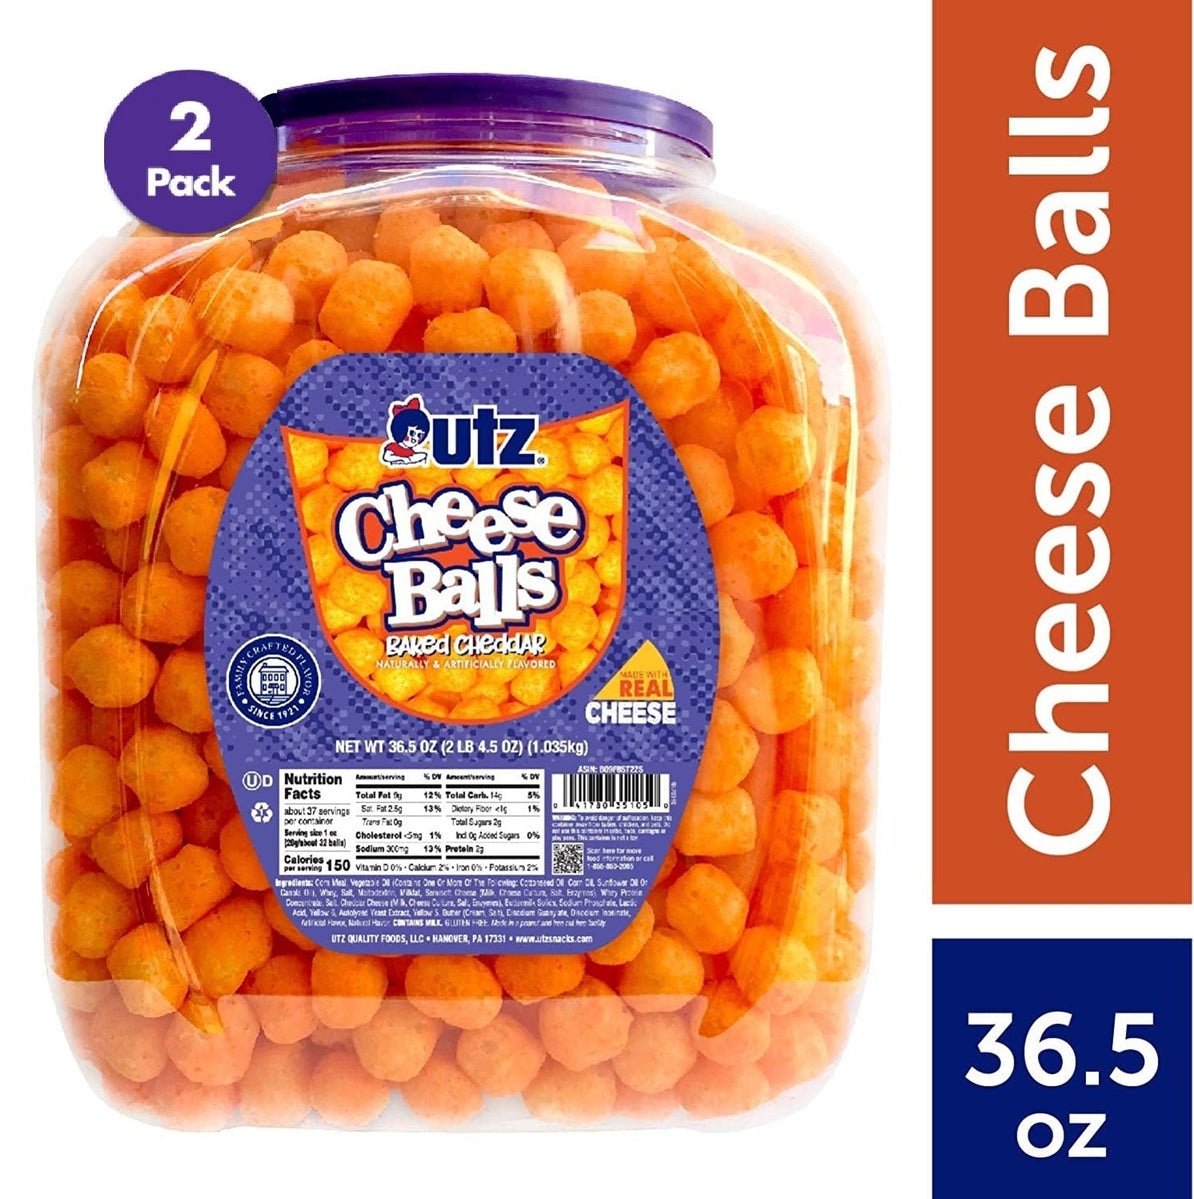 Utz Cheese Balls, Cheddar Cheeseballs 36.5 oz. Barrels Cheese Snacks Utz 